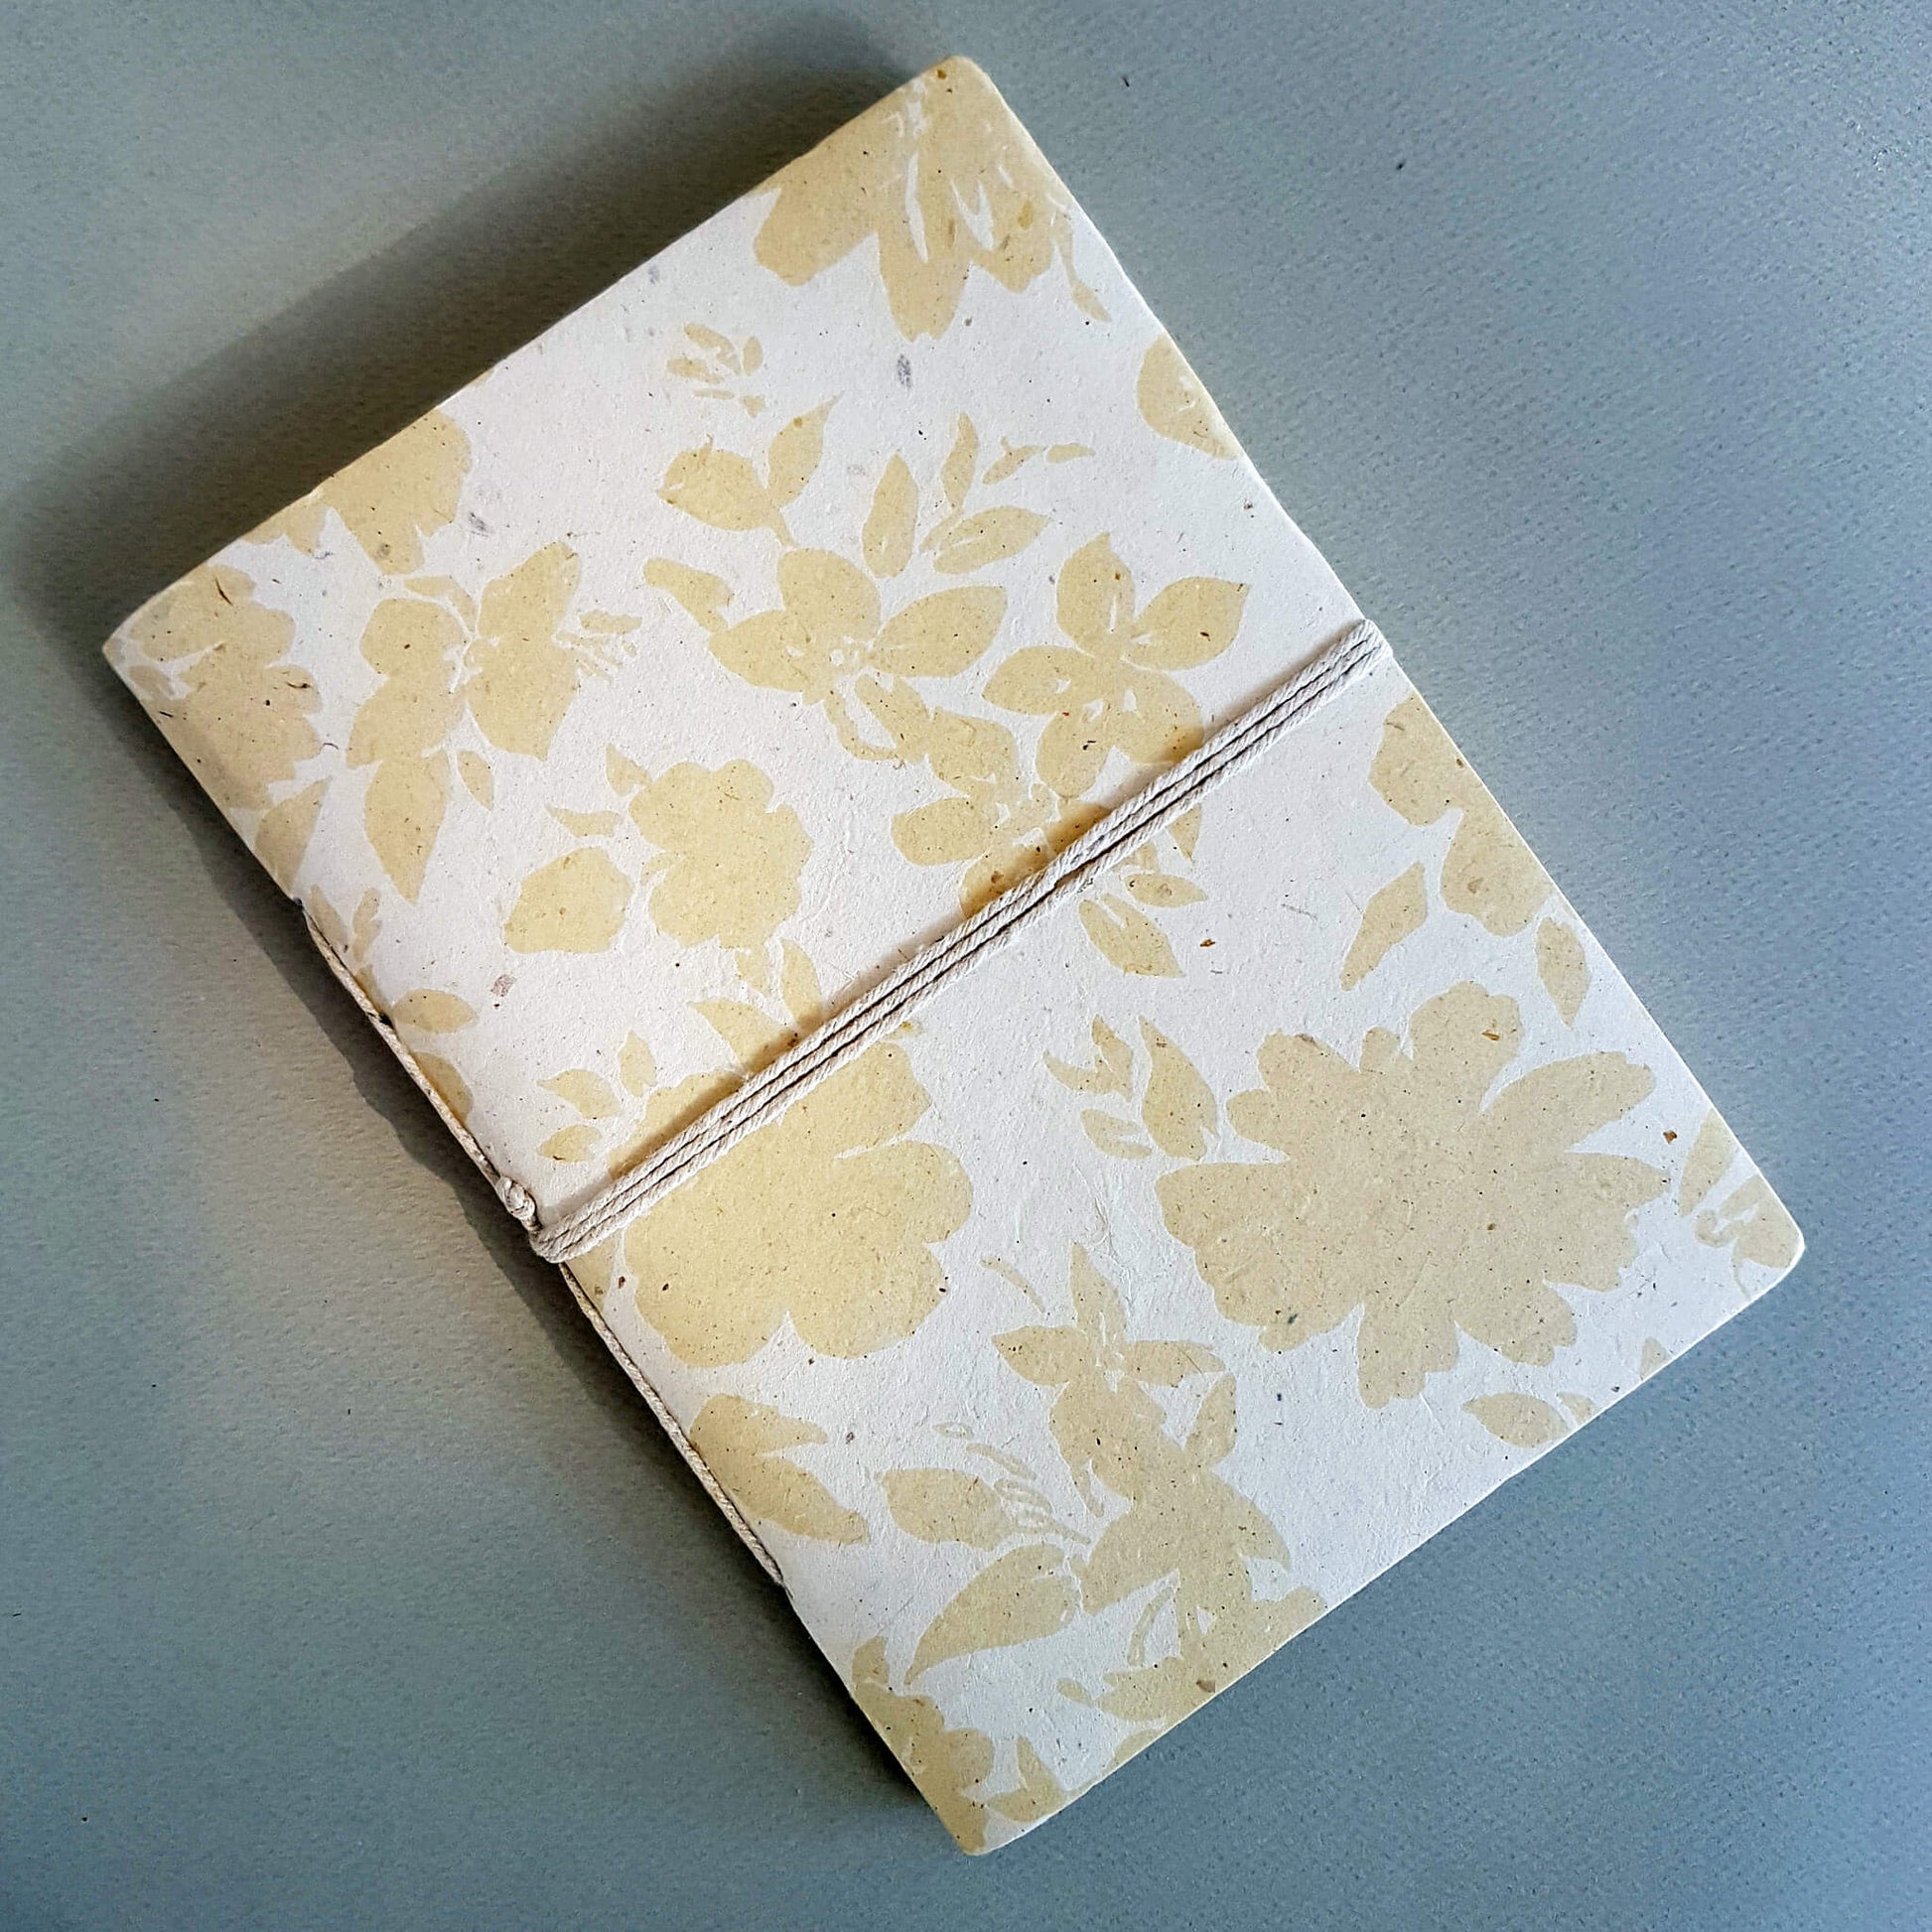 Handmade Lokta Paper Note Book Ecru & White Floral pattern Size L - Unik by Nature